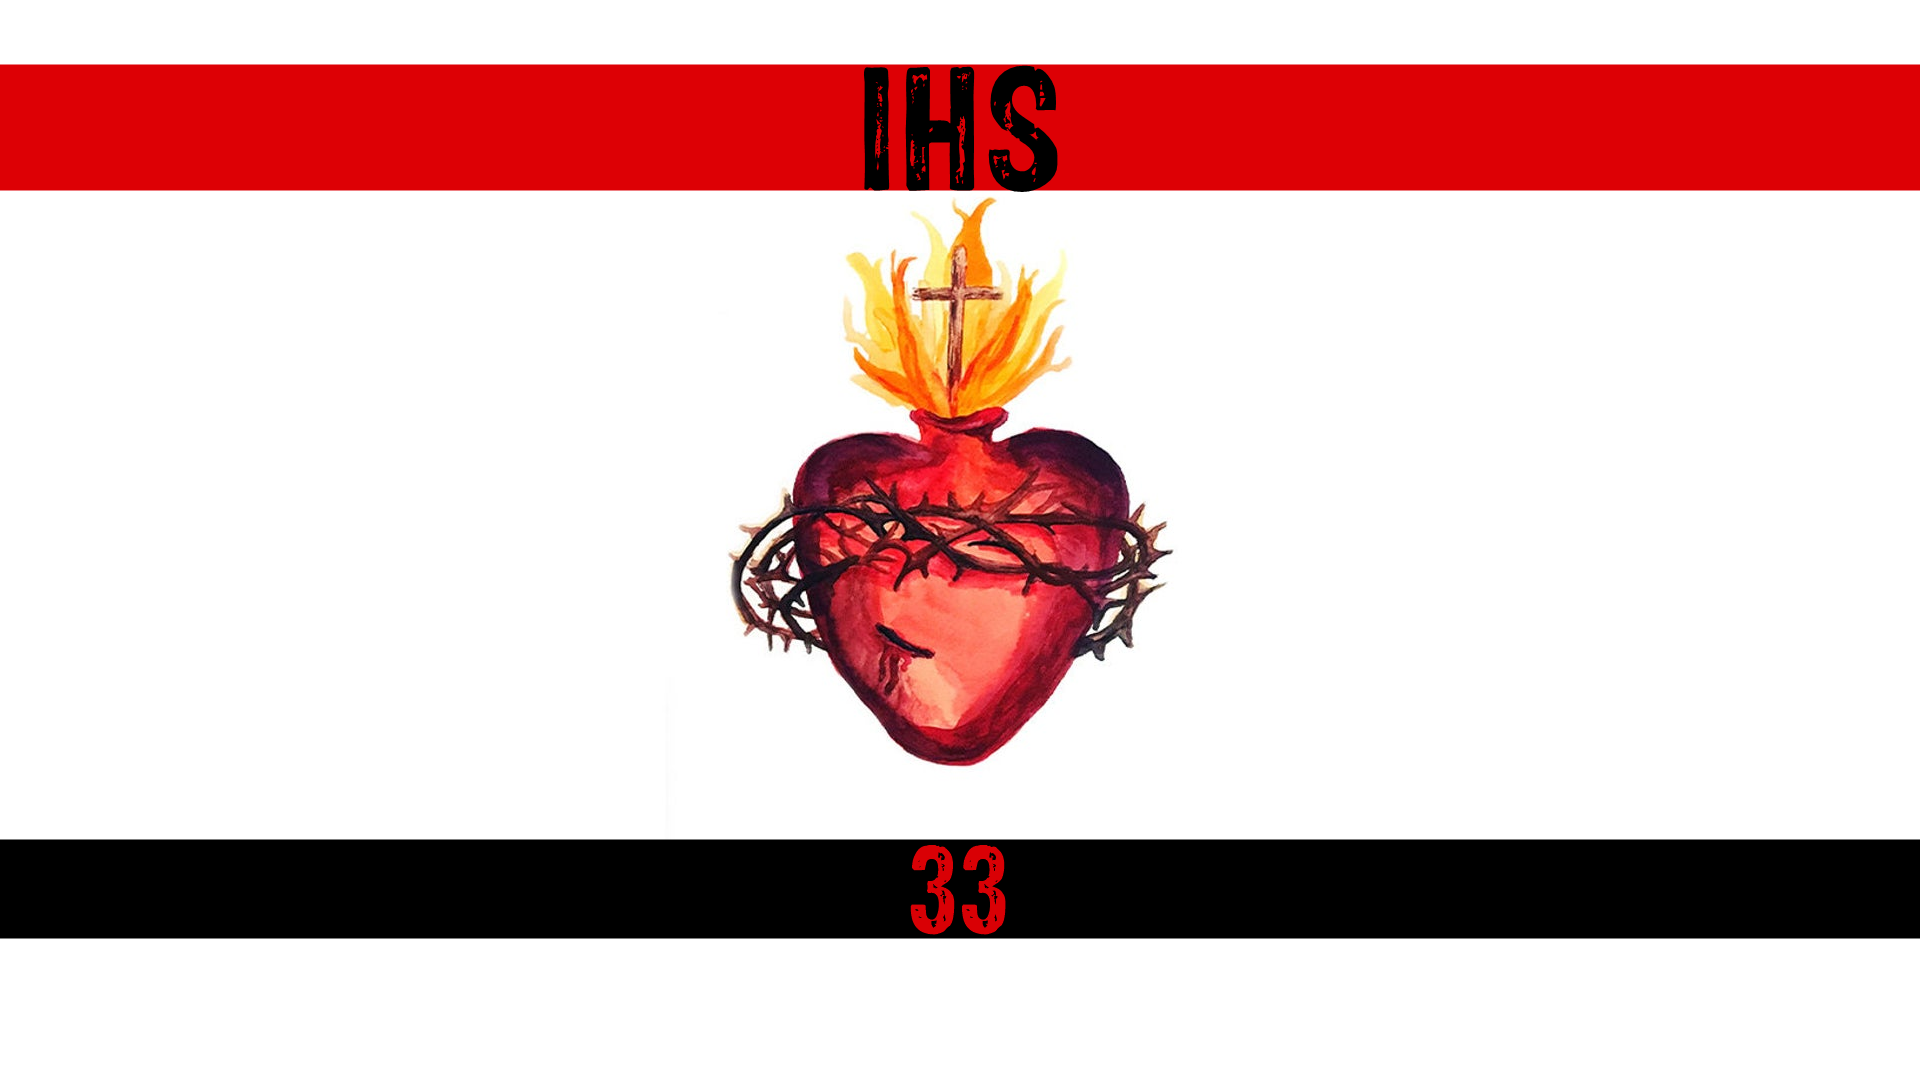 General 1920x1080 IHS Jesus Christ Sacred Heart red white black religion